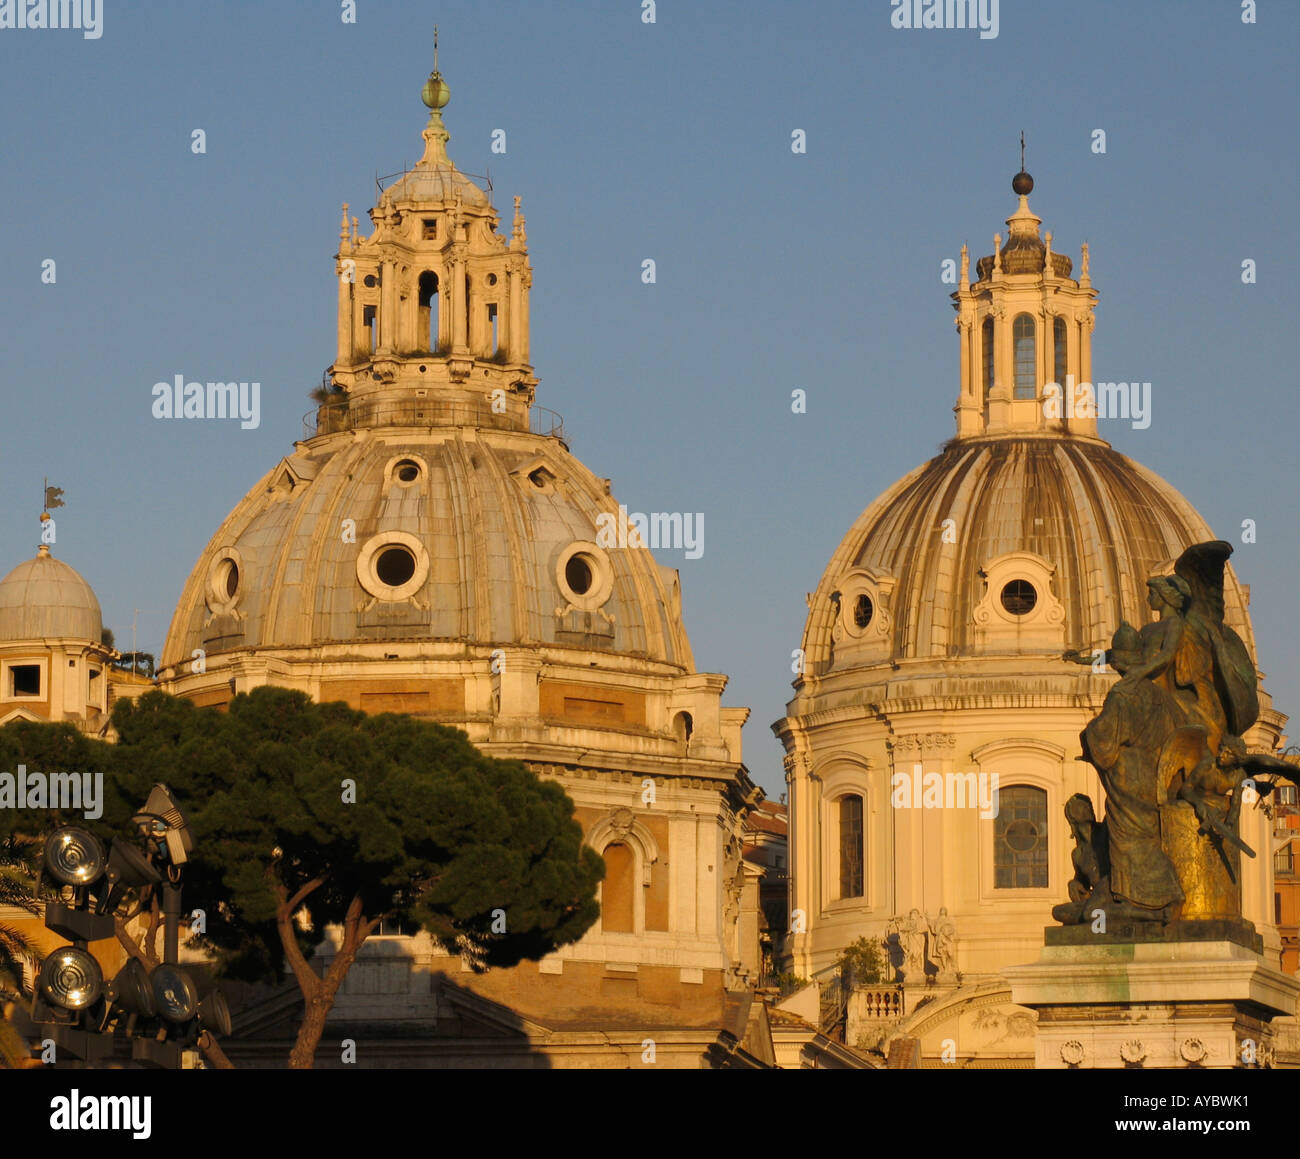 Domes of the churches Santa Maria di Loreto and Sacro Nome di Maria Rome Italy Stock Photo